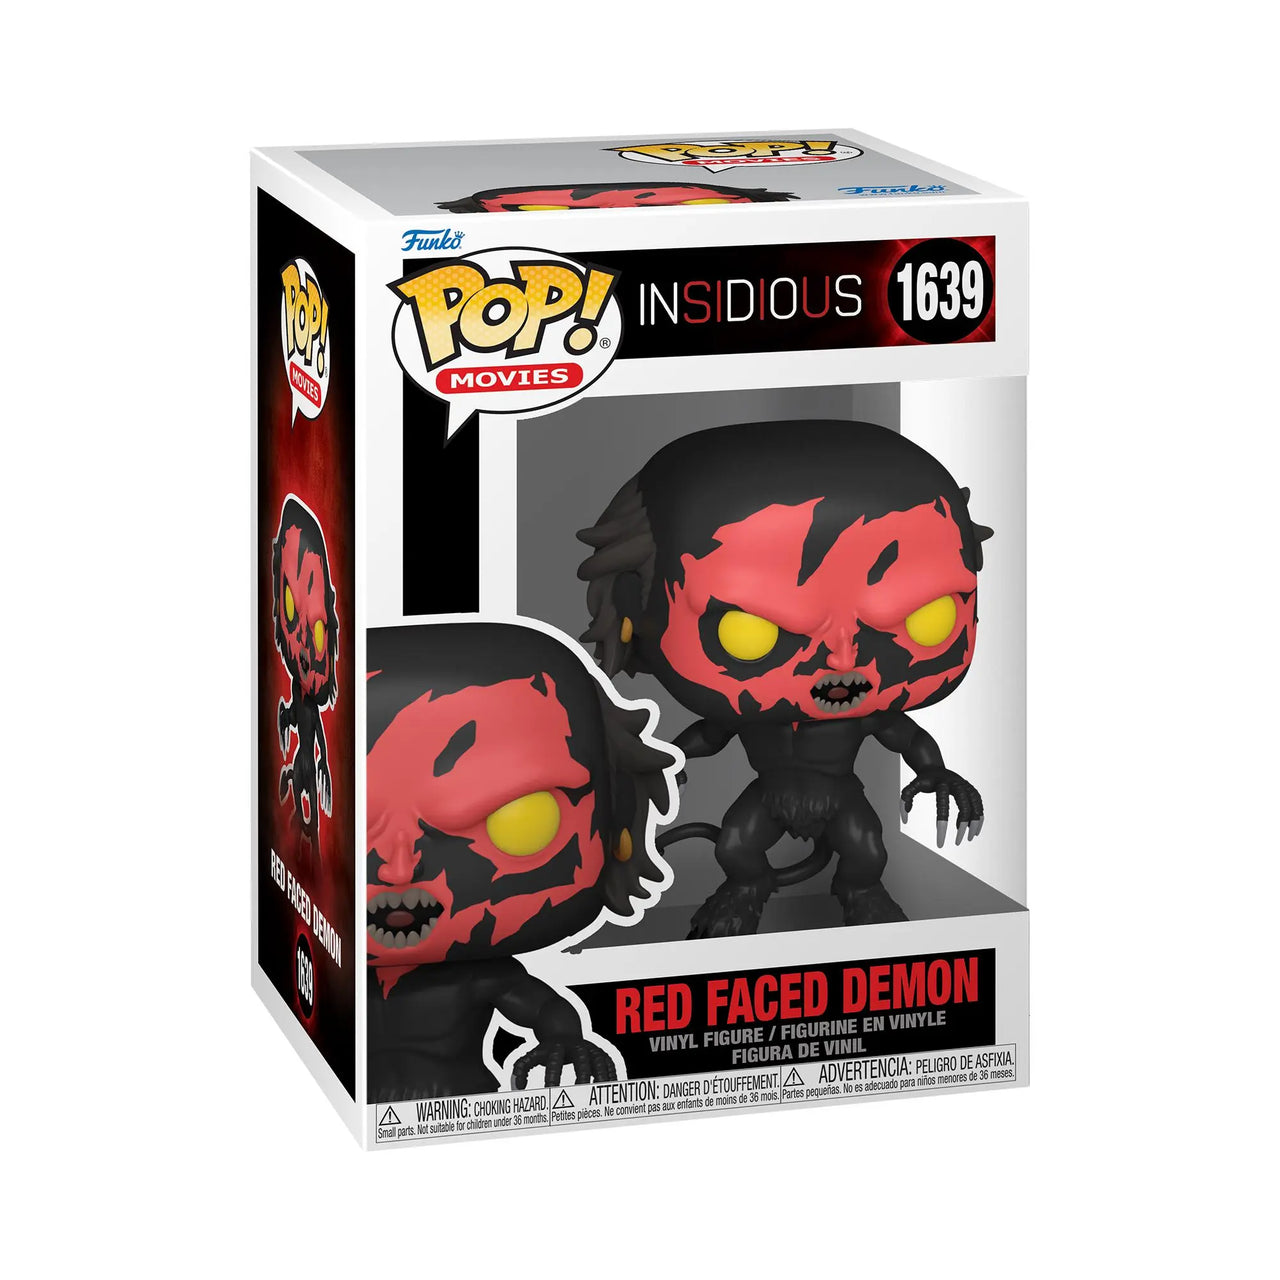 Funko Pop! Movies Insidious 1639 Red Face Demon funko